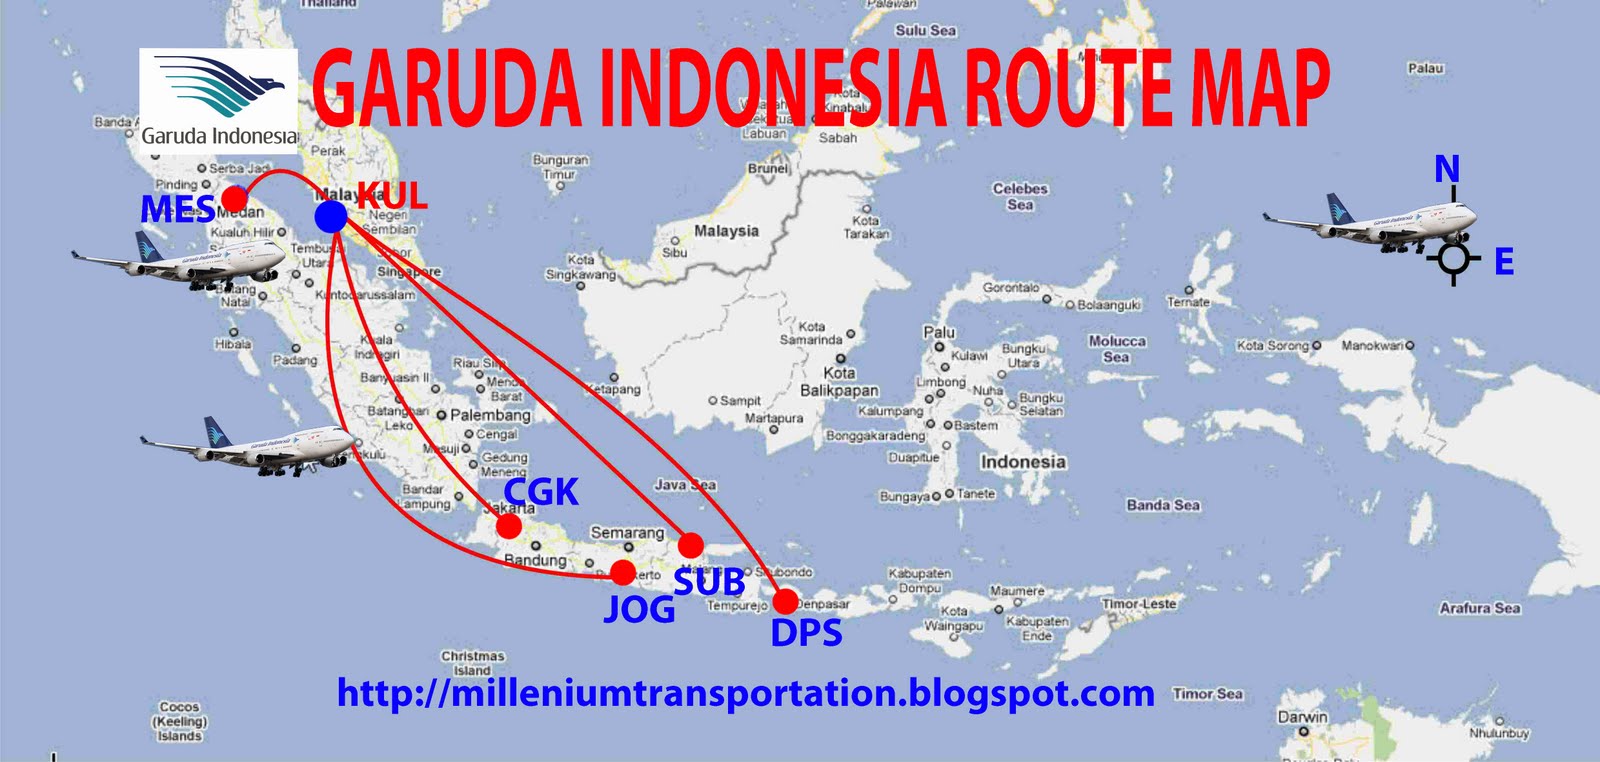 routes map: Garuda Indonesia Routes Map